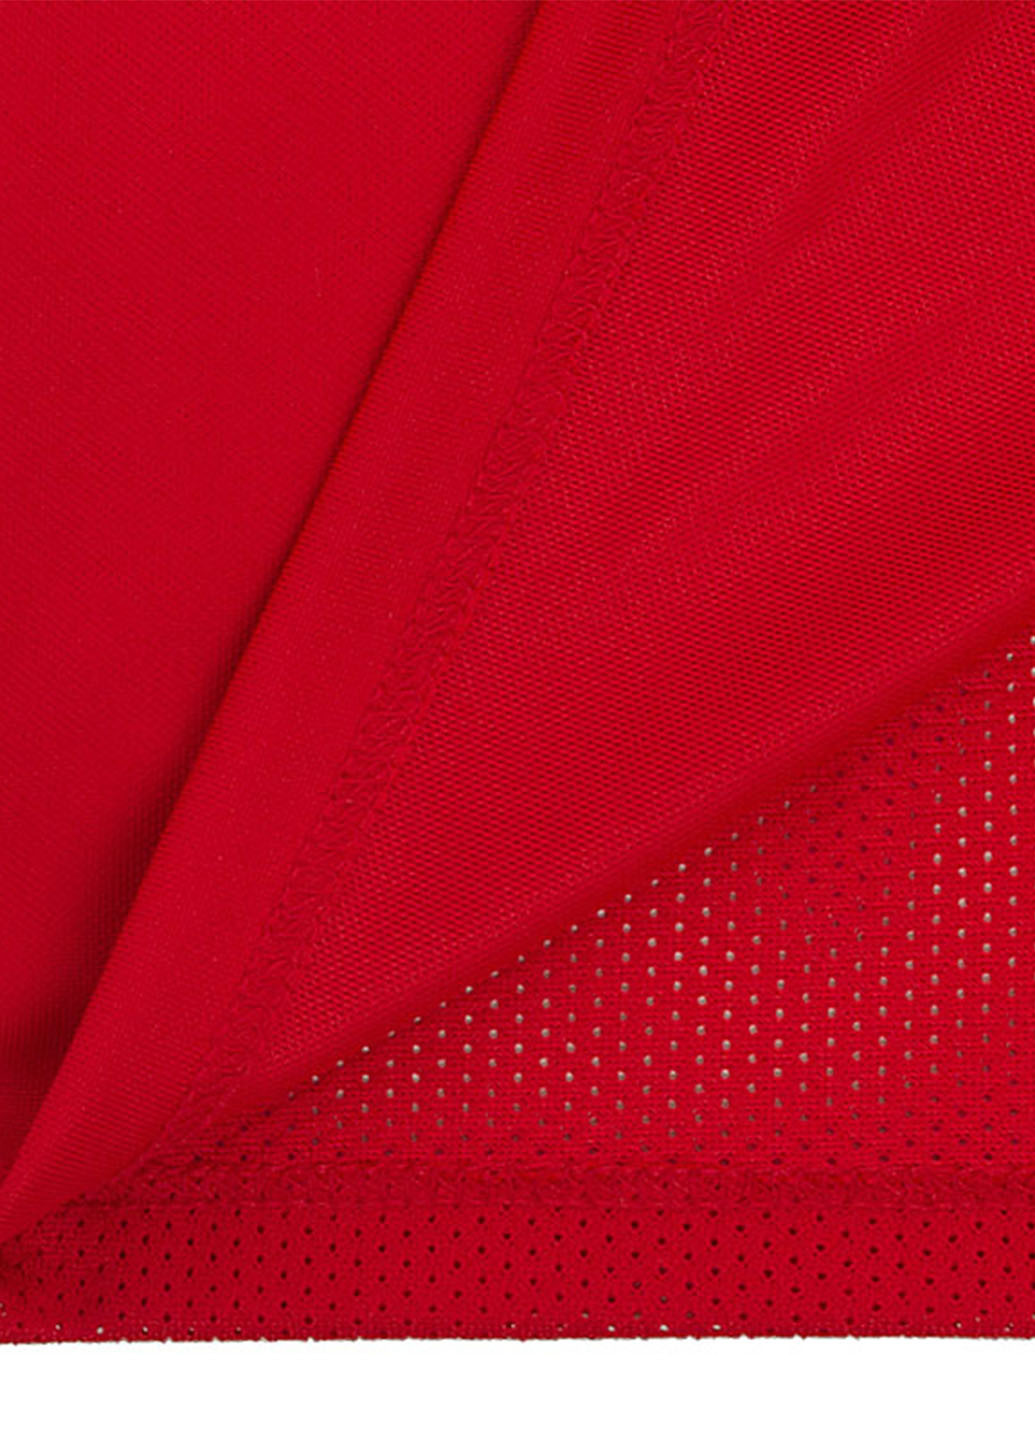 Красный демисезонный костюм (футболка, шорты, гетры) Nike LK NK DRY PARK20 KIT SET K